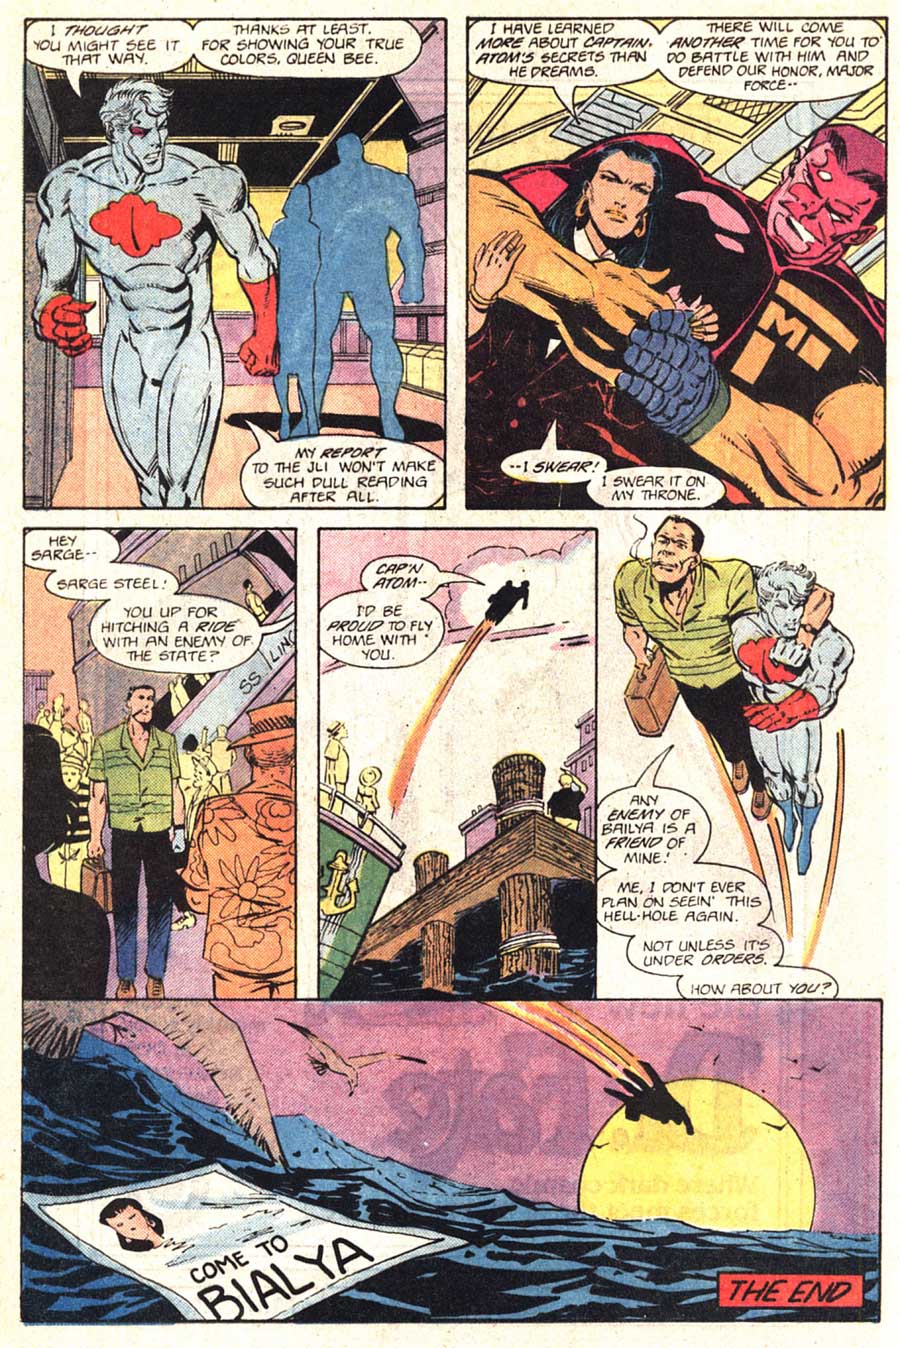 Captain Atom Annual #2 by Cary Bates, Greg Weisman, Paris Cullins & Bob Smith